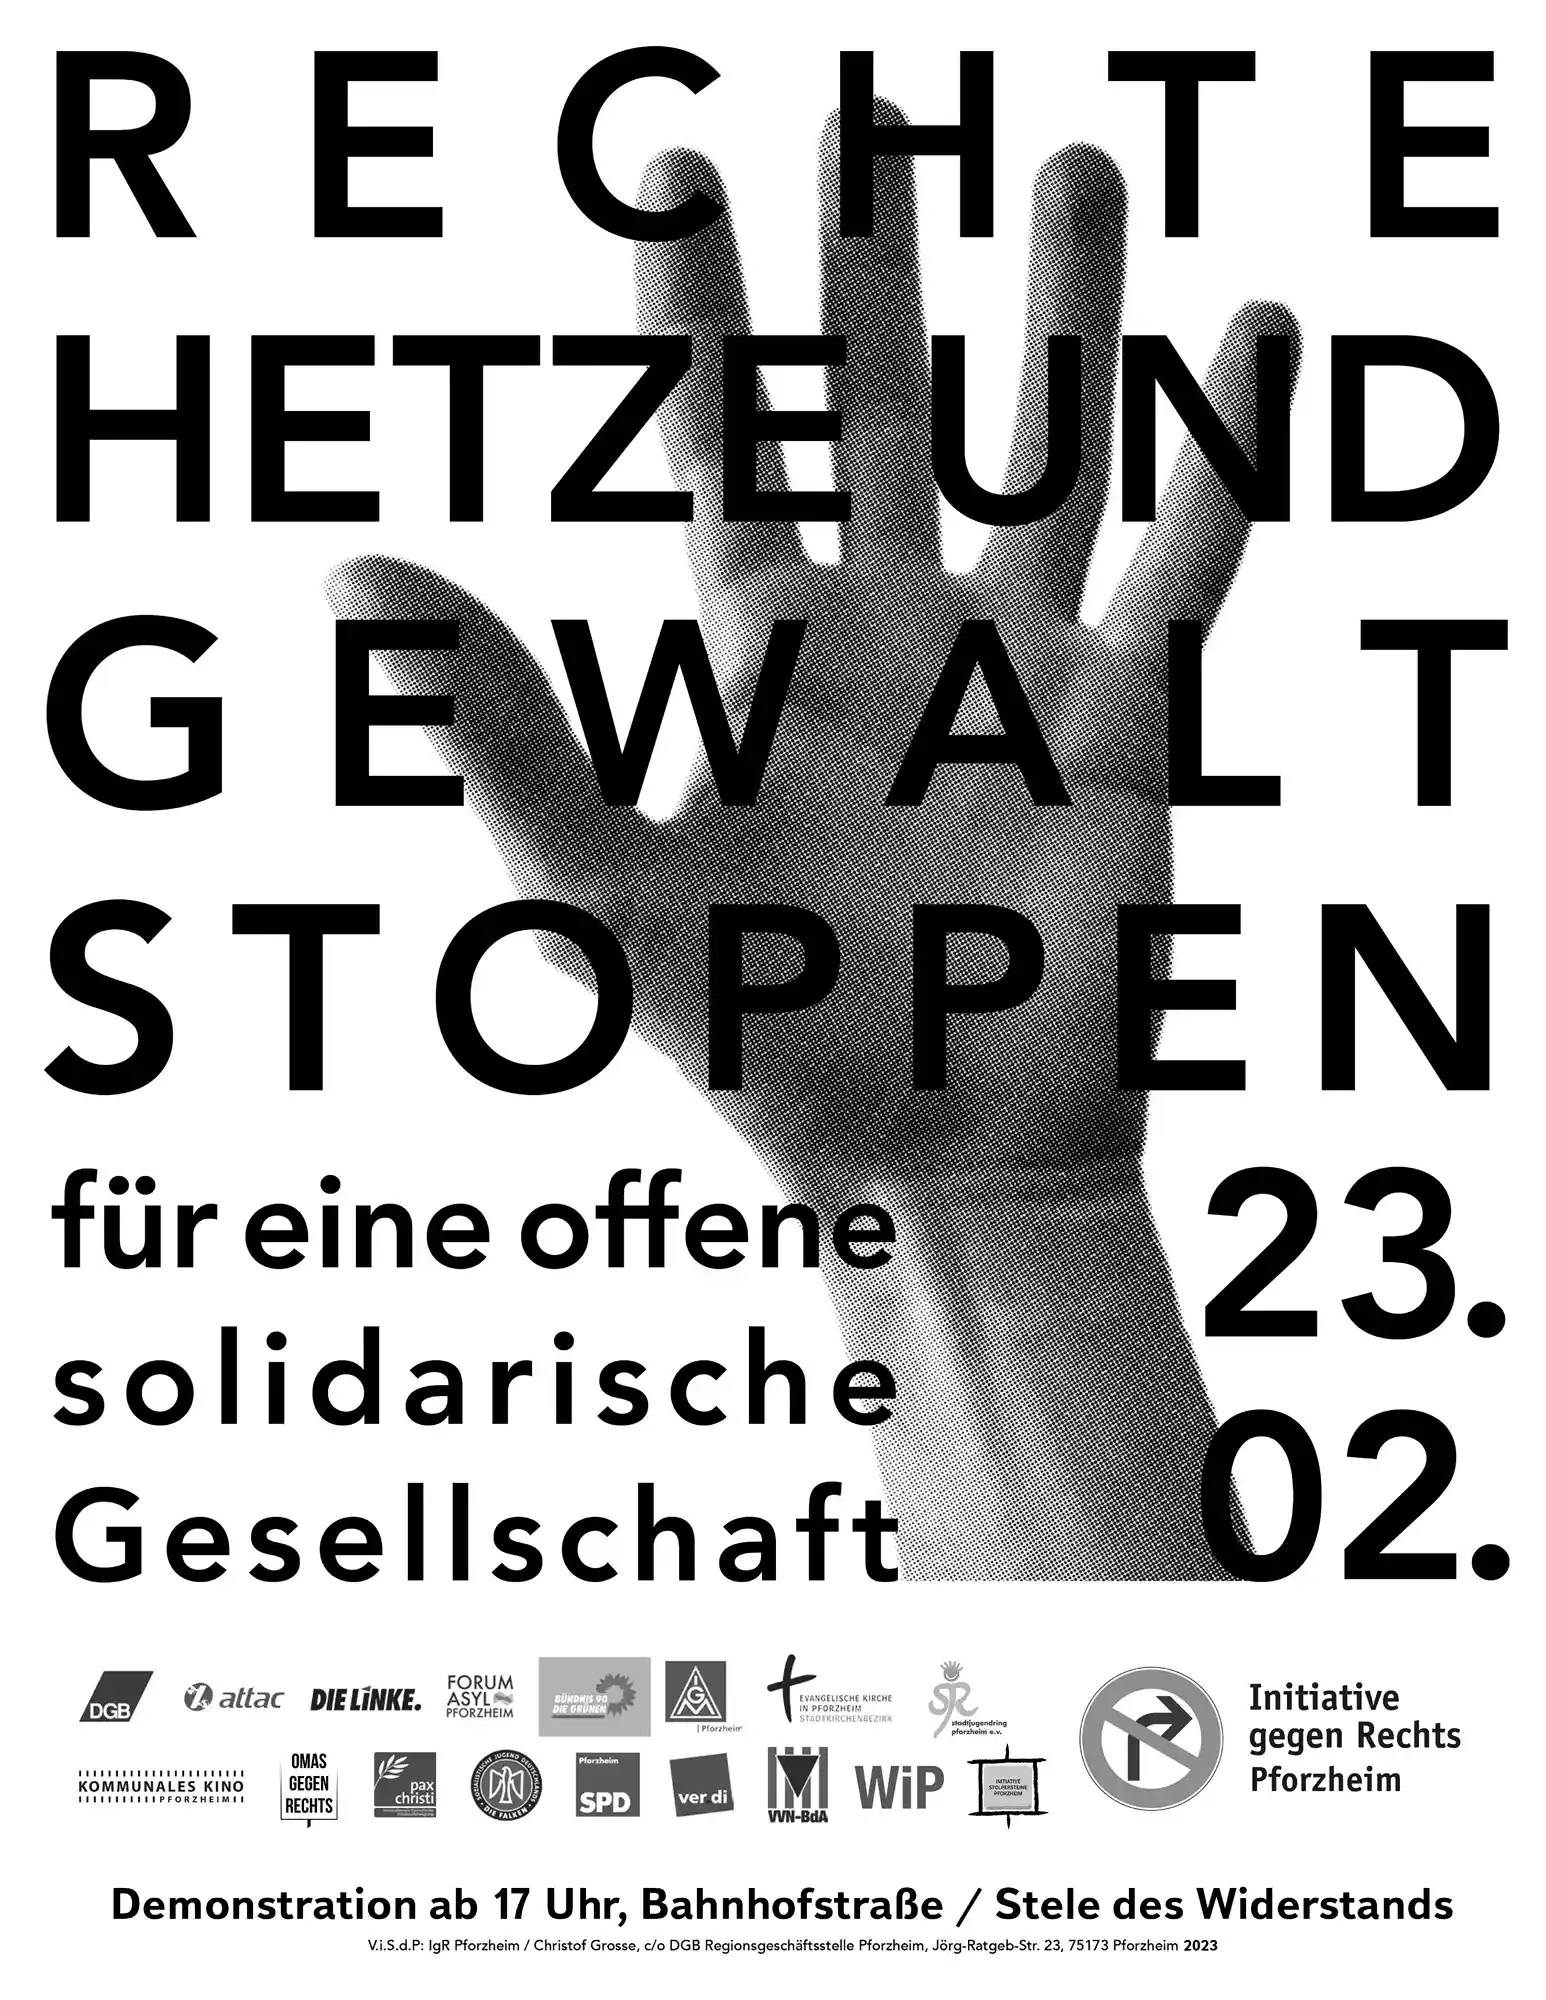 Initiative gegen Rechts Pforzheim demonstriert am 23. Februar in der Innenstadt